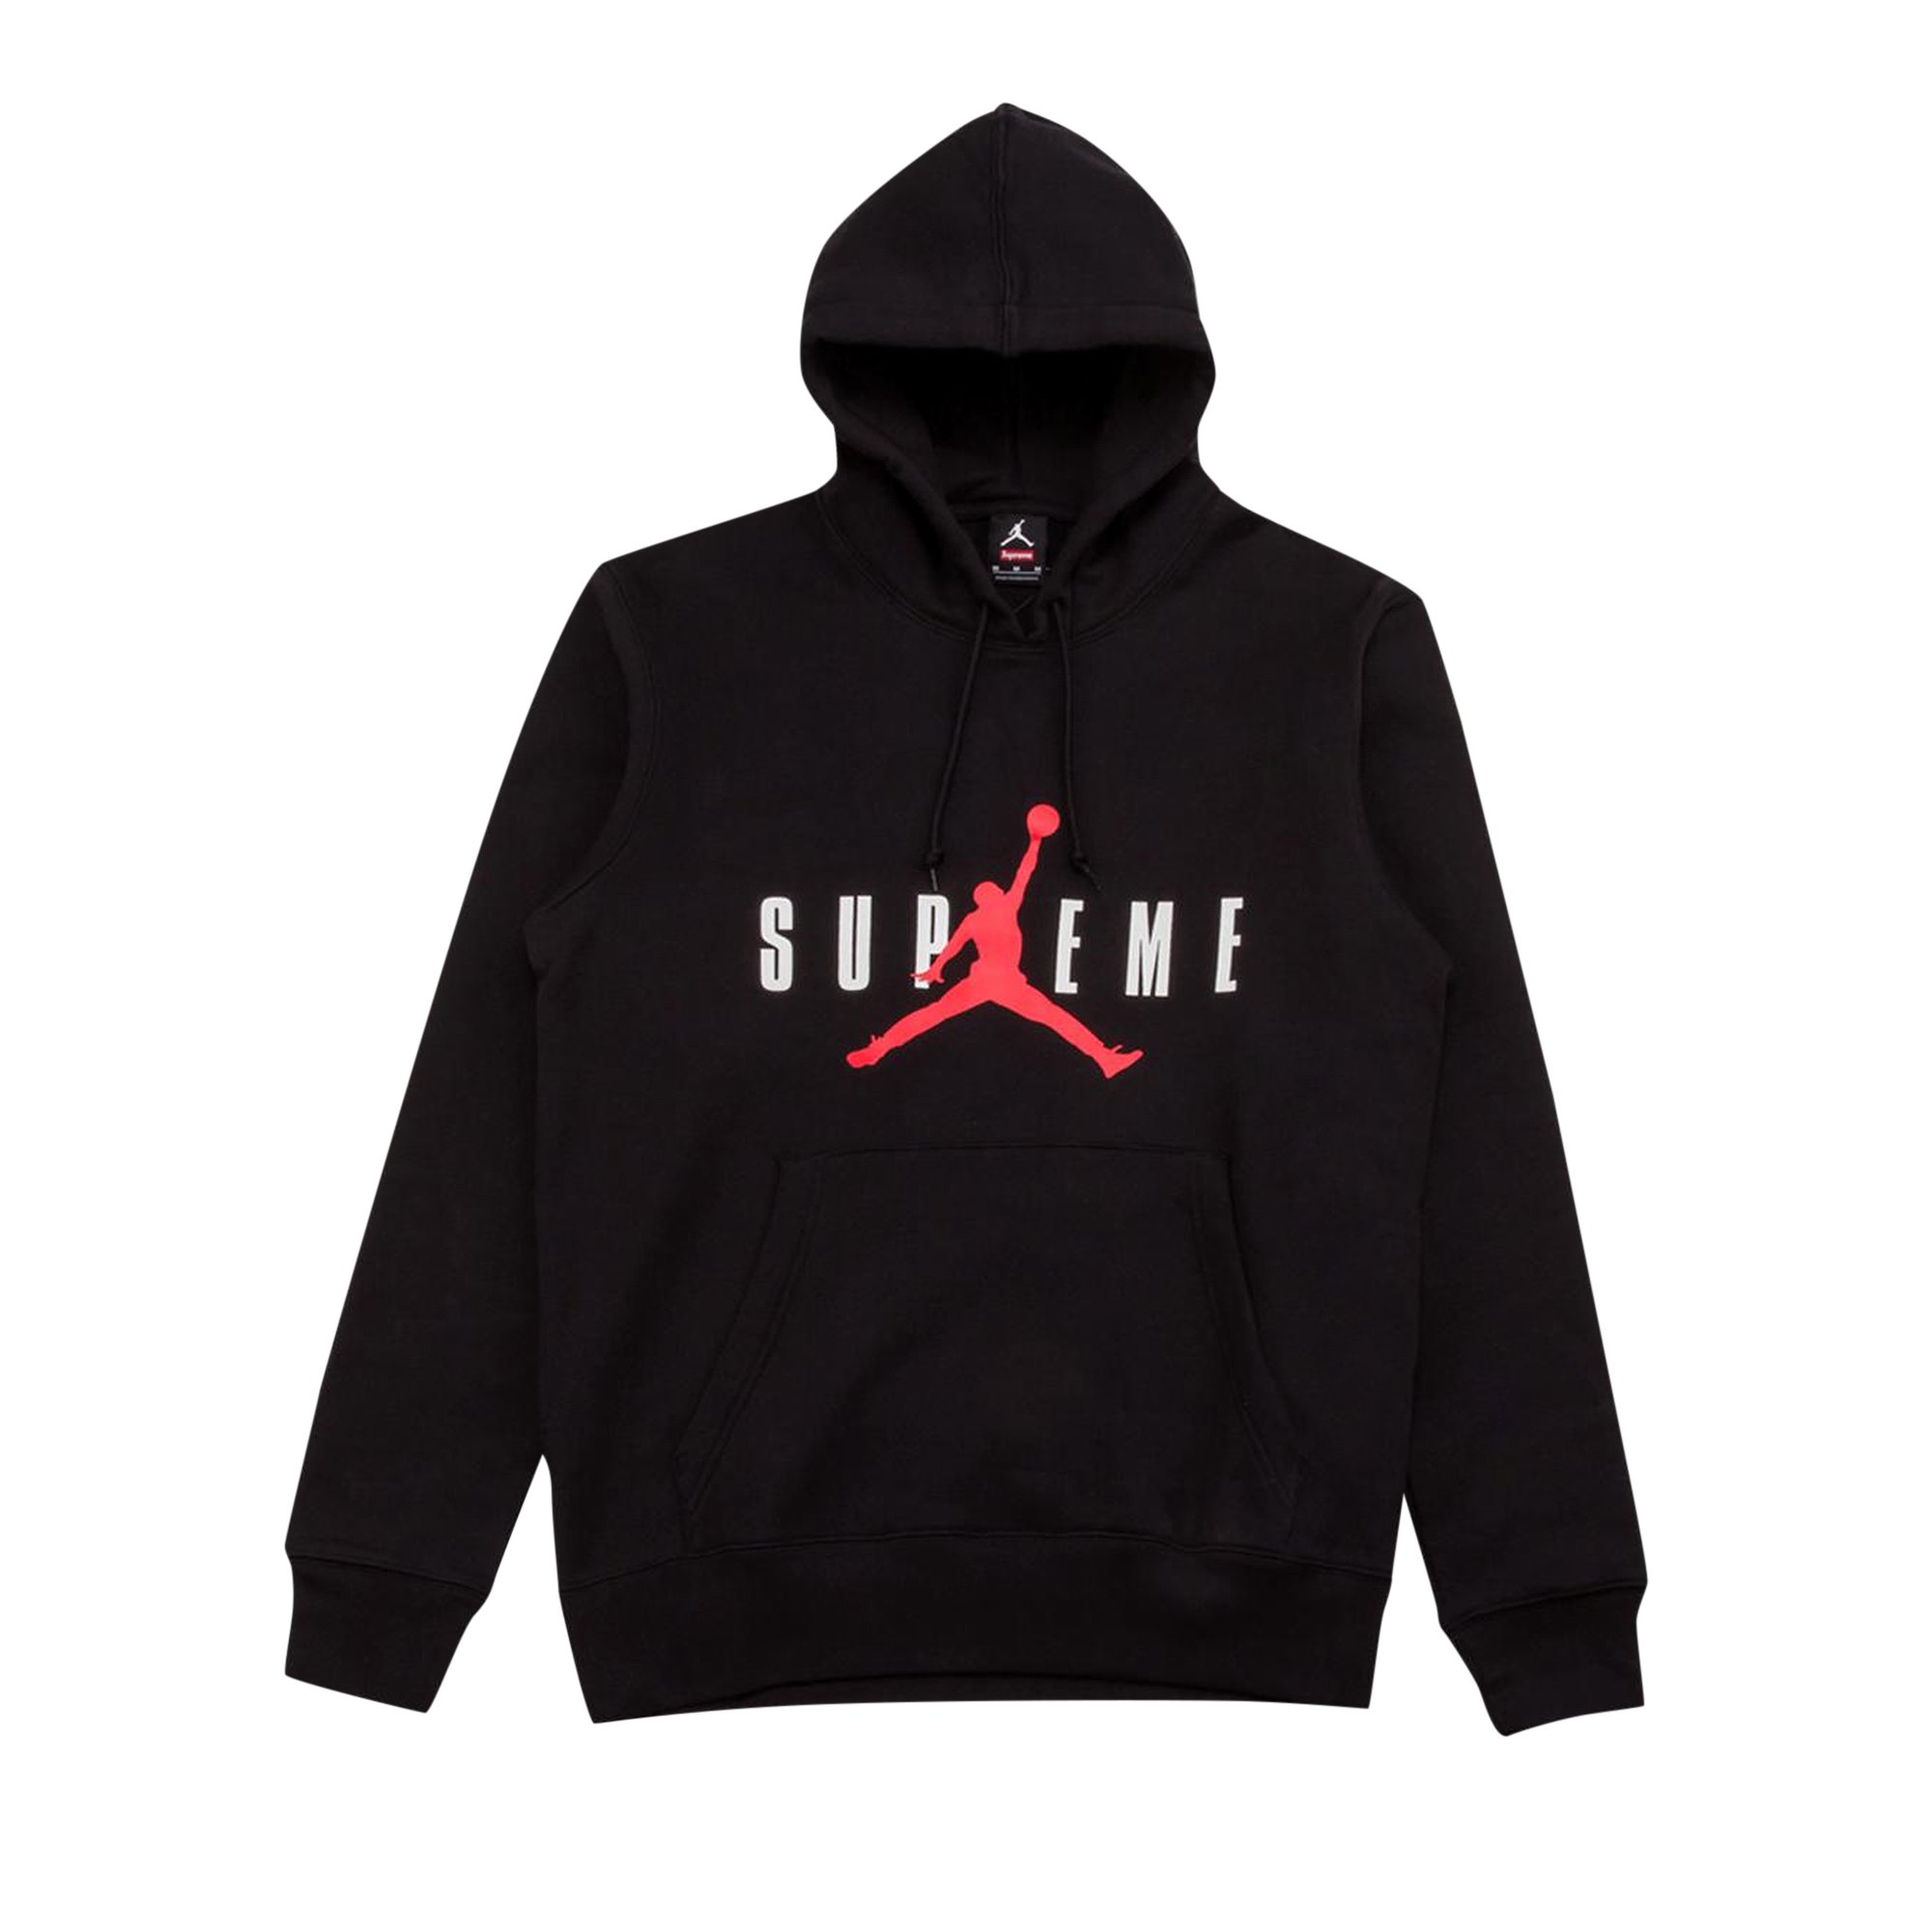 Buy Supreme x Jordan Hooded Pullover 'Black' - FW15SW3 BLACK | GOAT